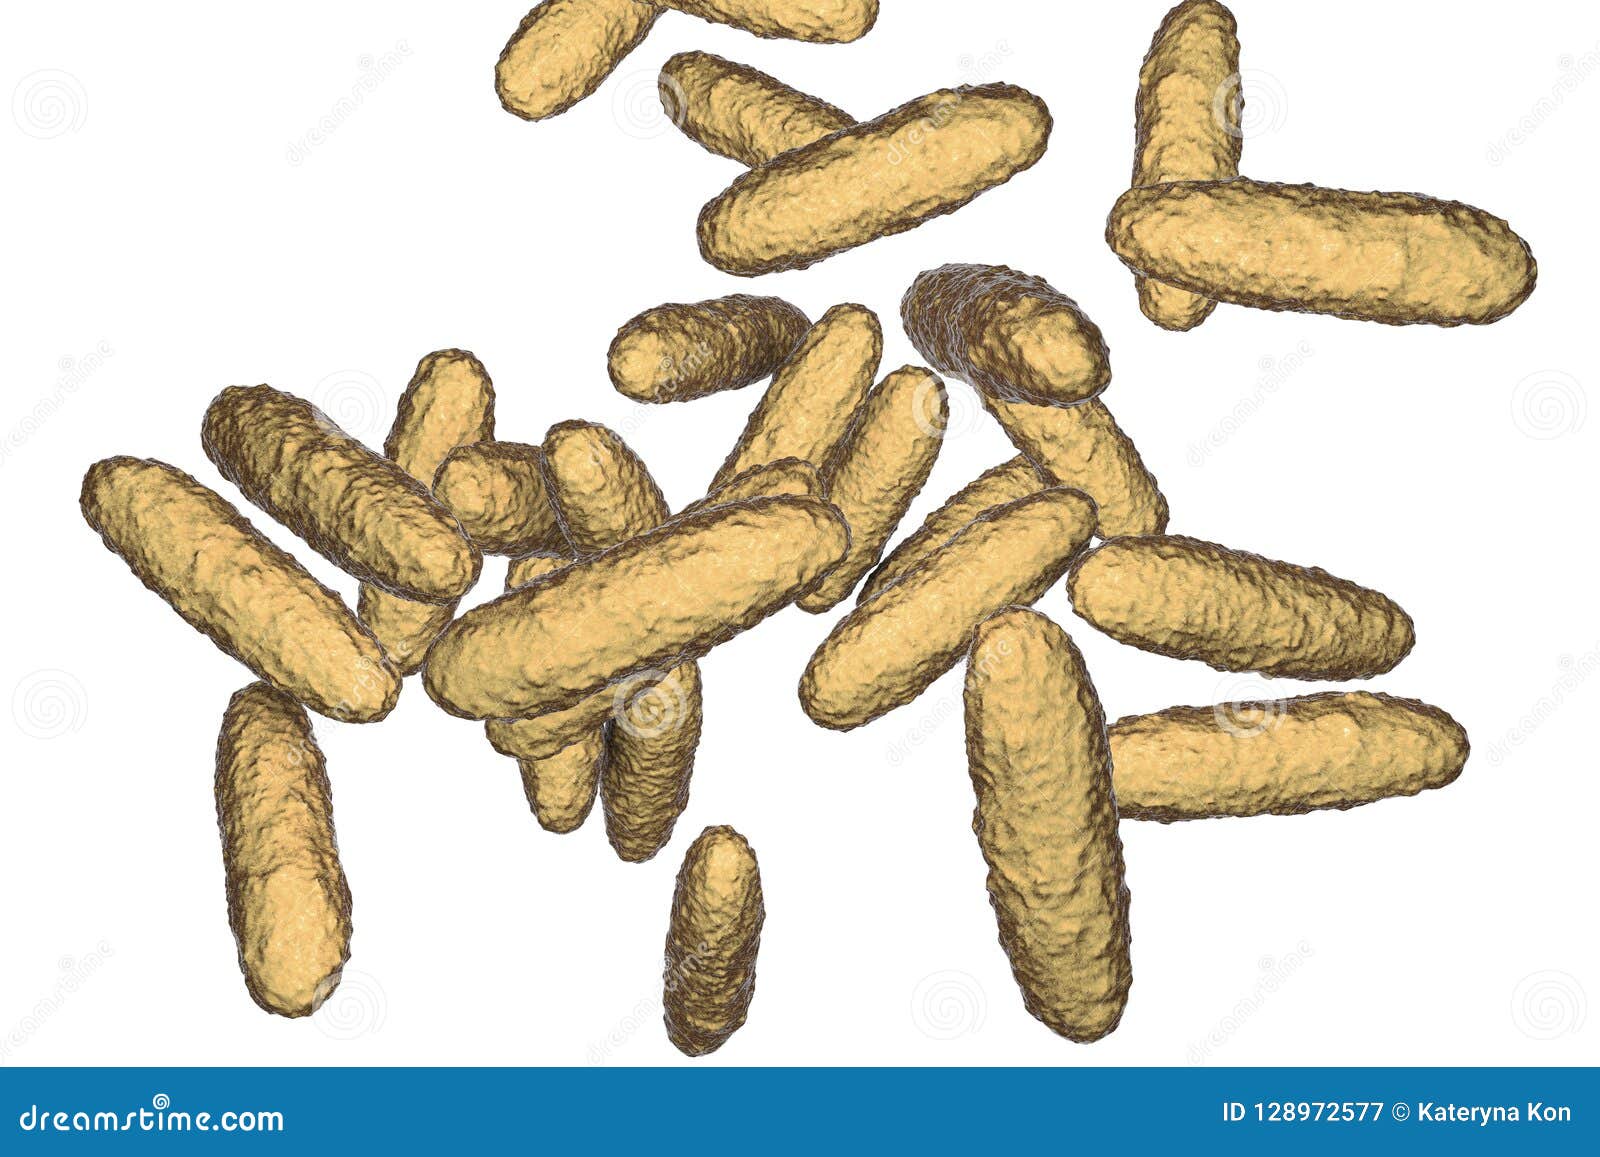 bacteria klebsiella granulomatis, the causative agent of granuloma inguinale